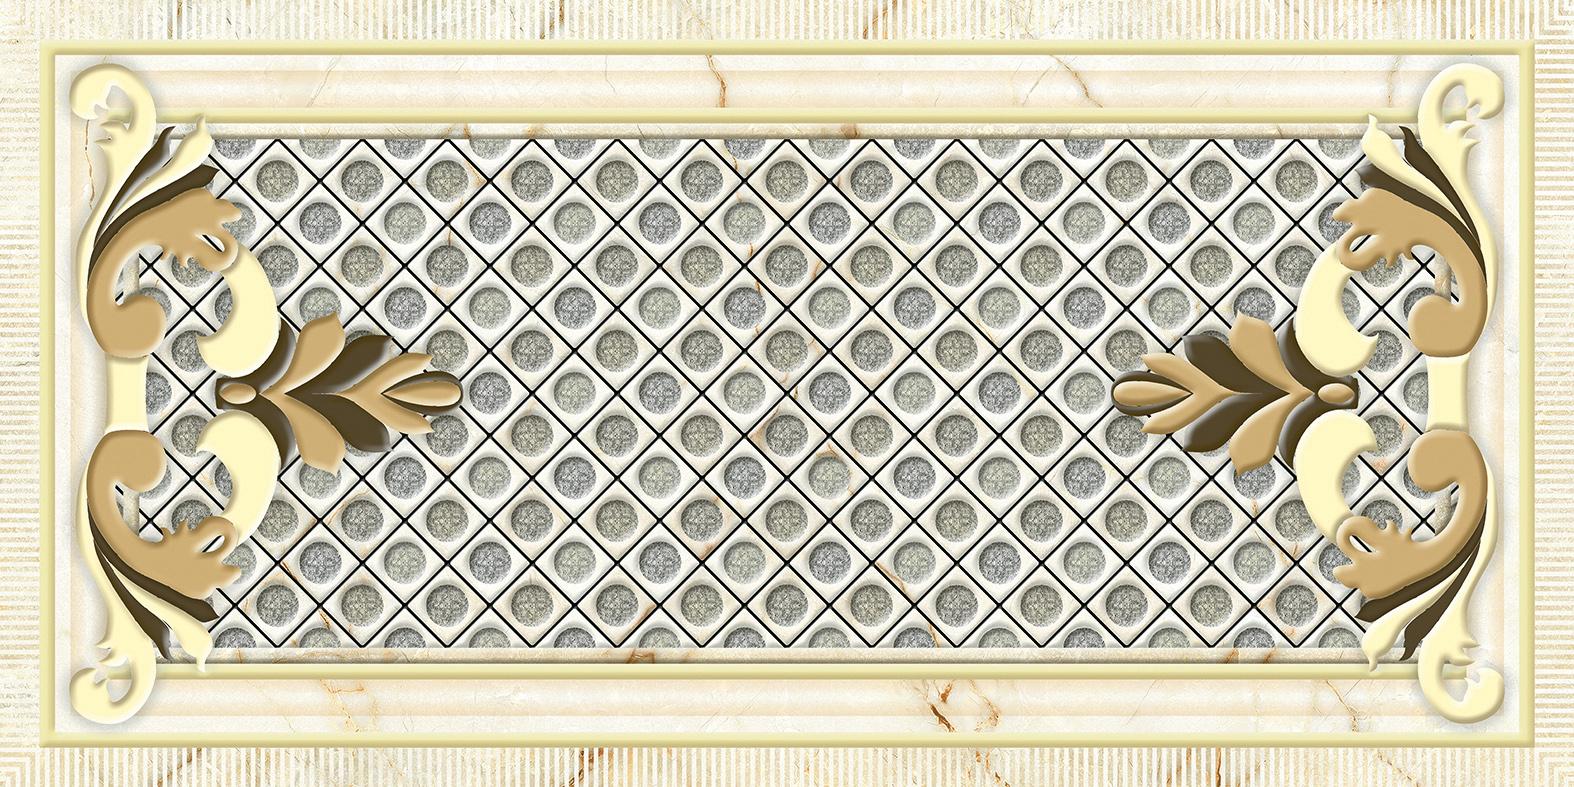 Ivory Tiles for Bathroom Tiles, Kitchen Tiles, Accent Tiles